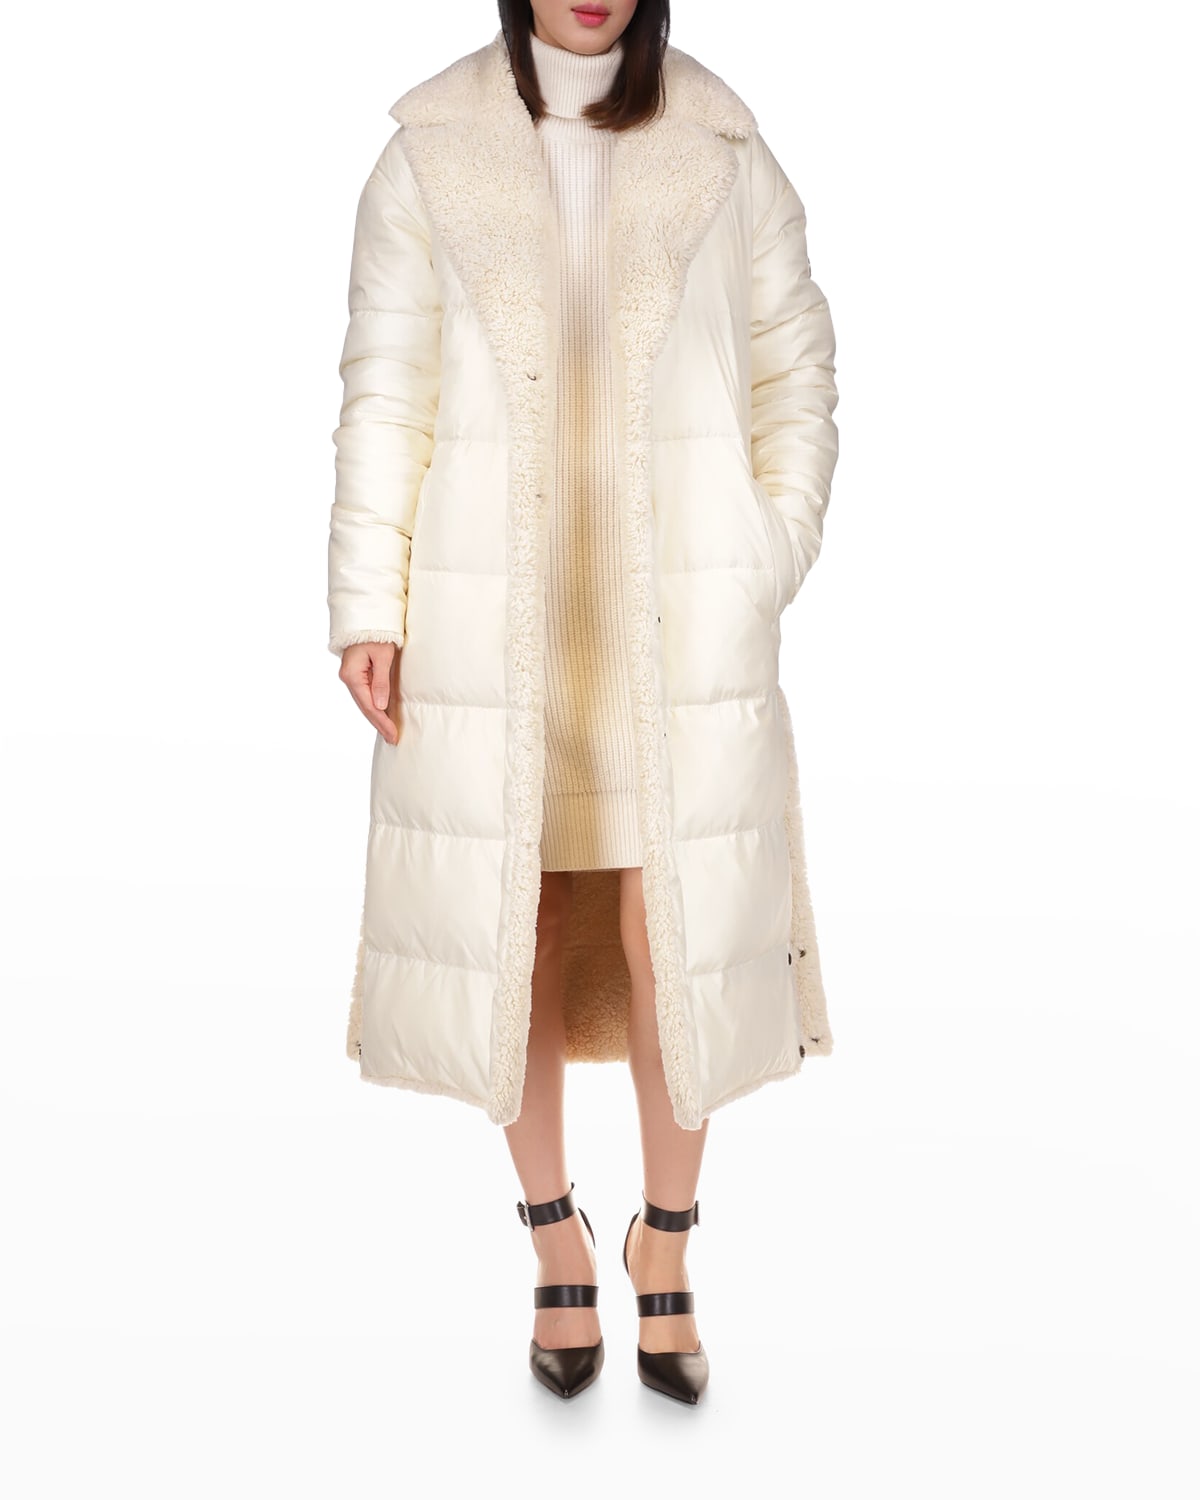 Vintage Parkas Luxury Women Long Jacket Real Farm Shearling Lamb Fur Coat Sweet